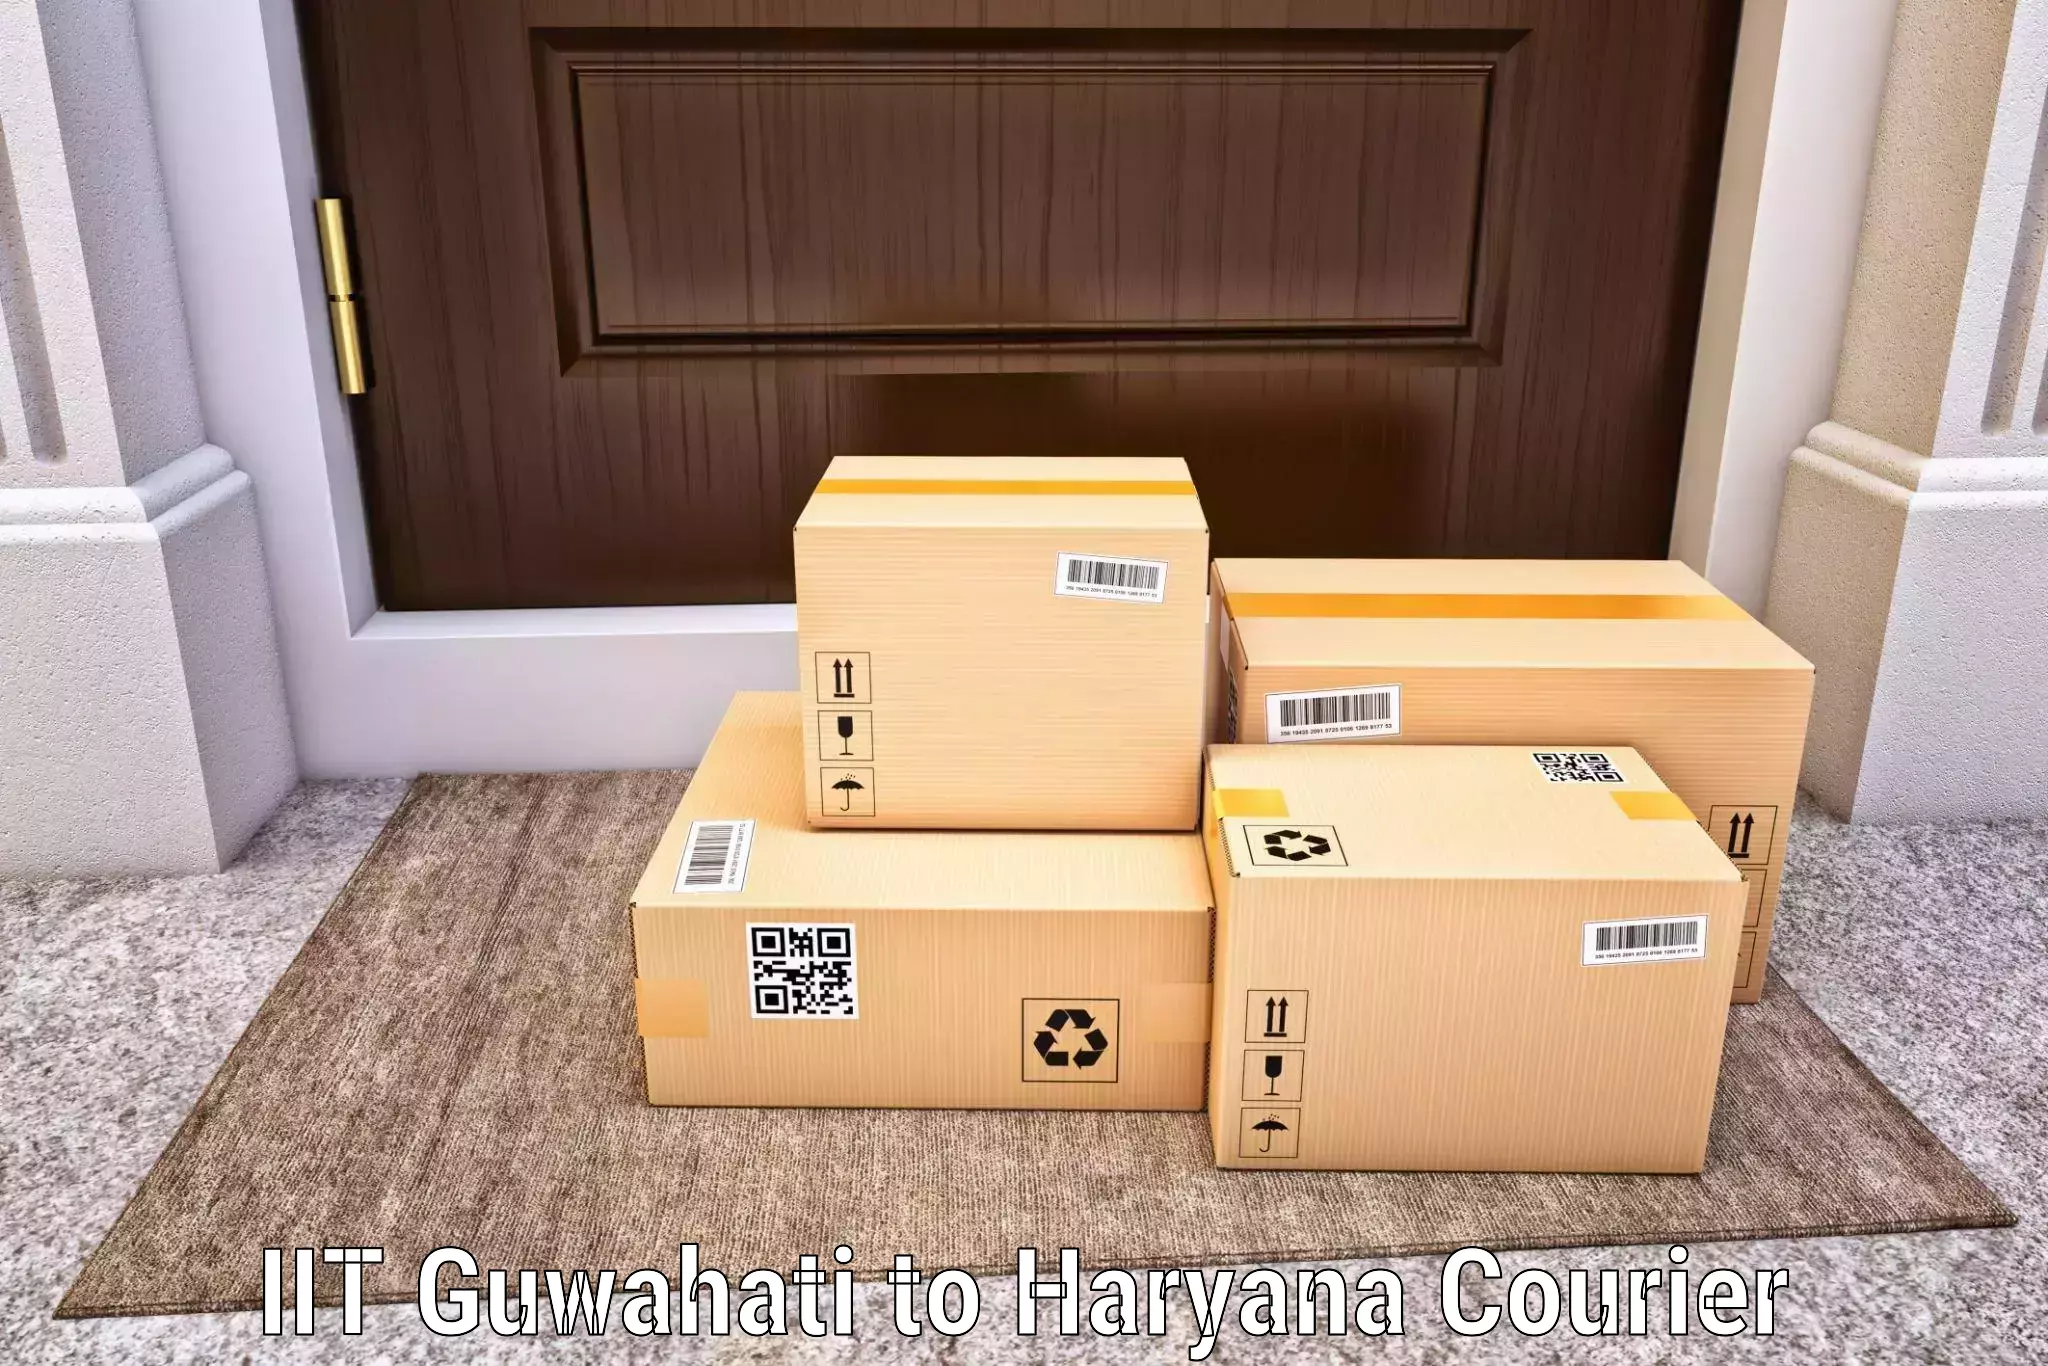 Multi-service courier options IIT Guwahati to Siwani